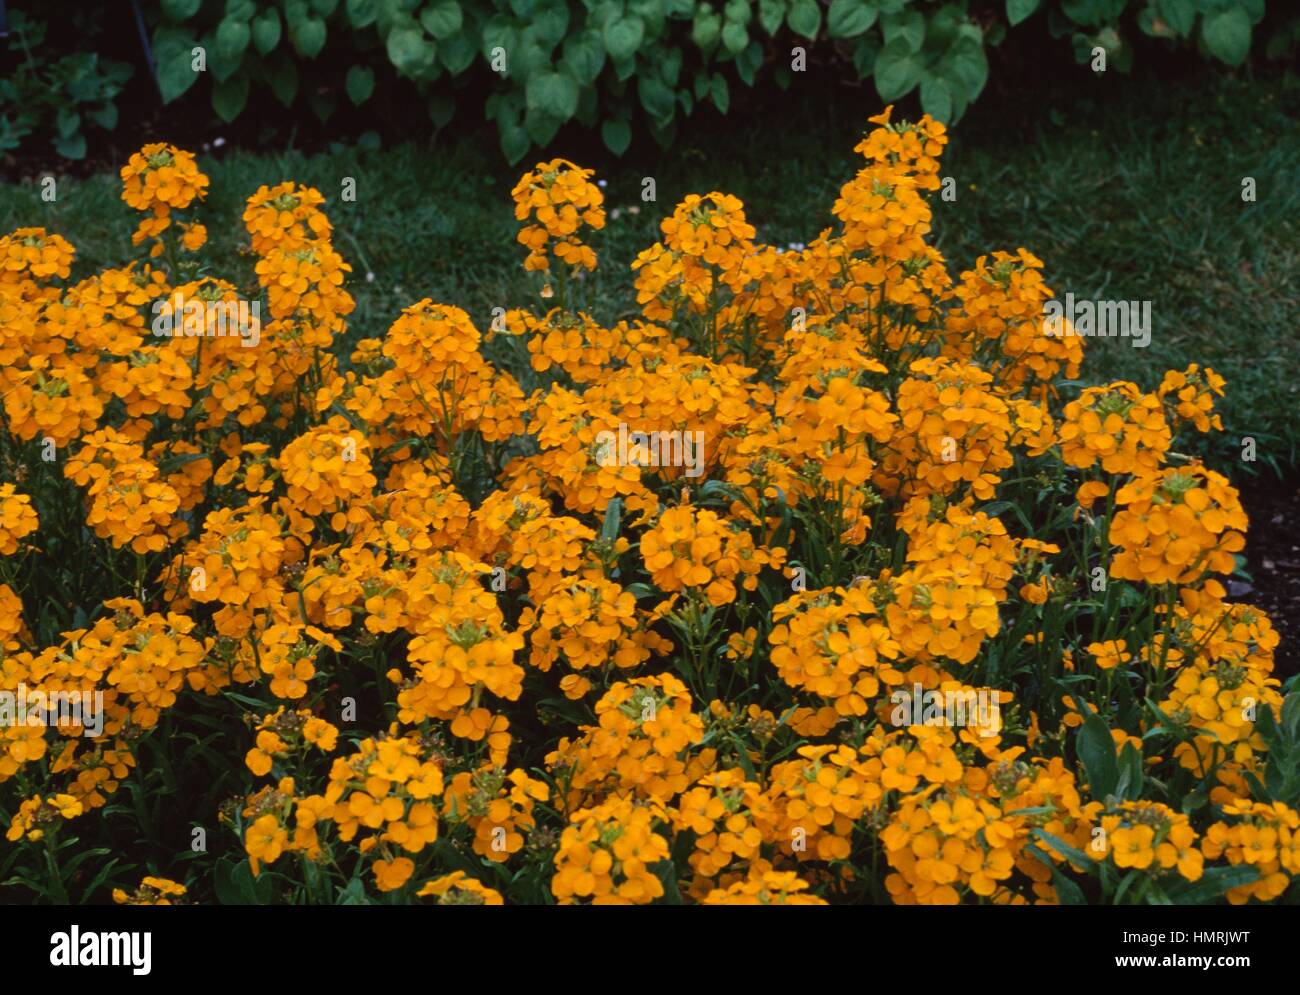 Afghan Wallflower (Erysimum perofskianum), Brassicaceae. Stock Photo